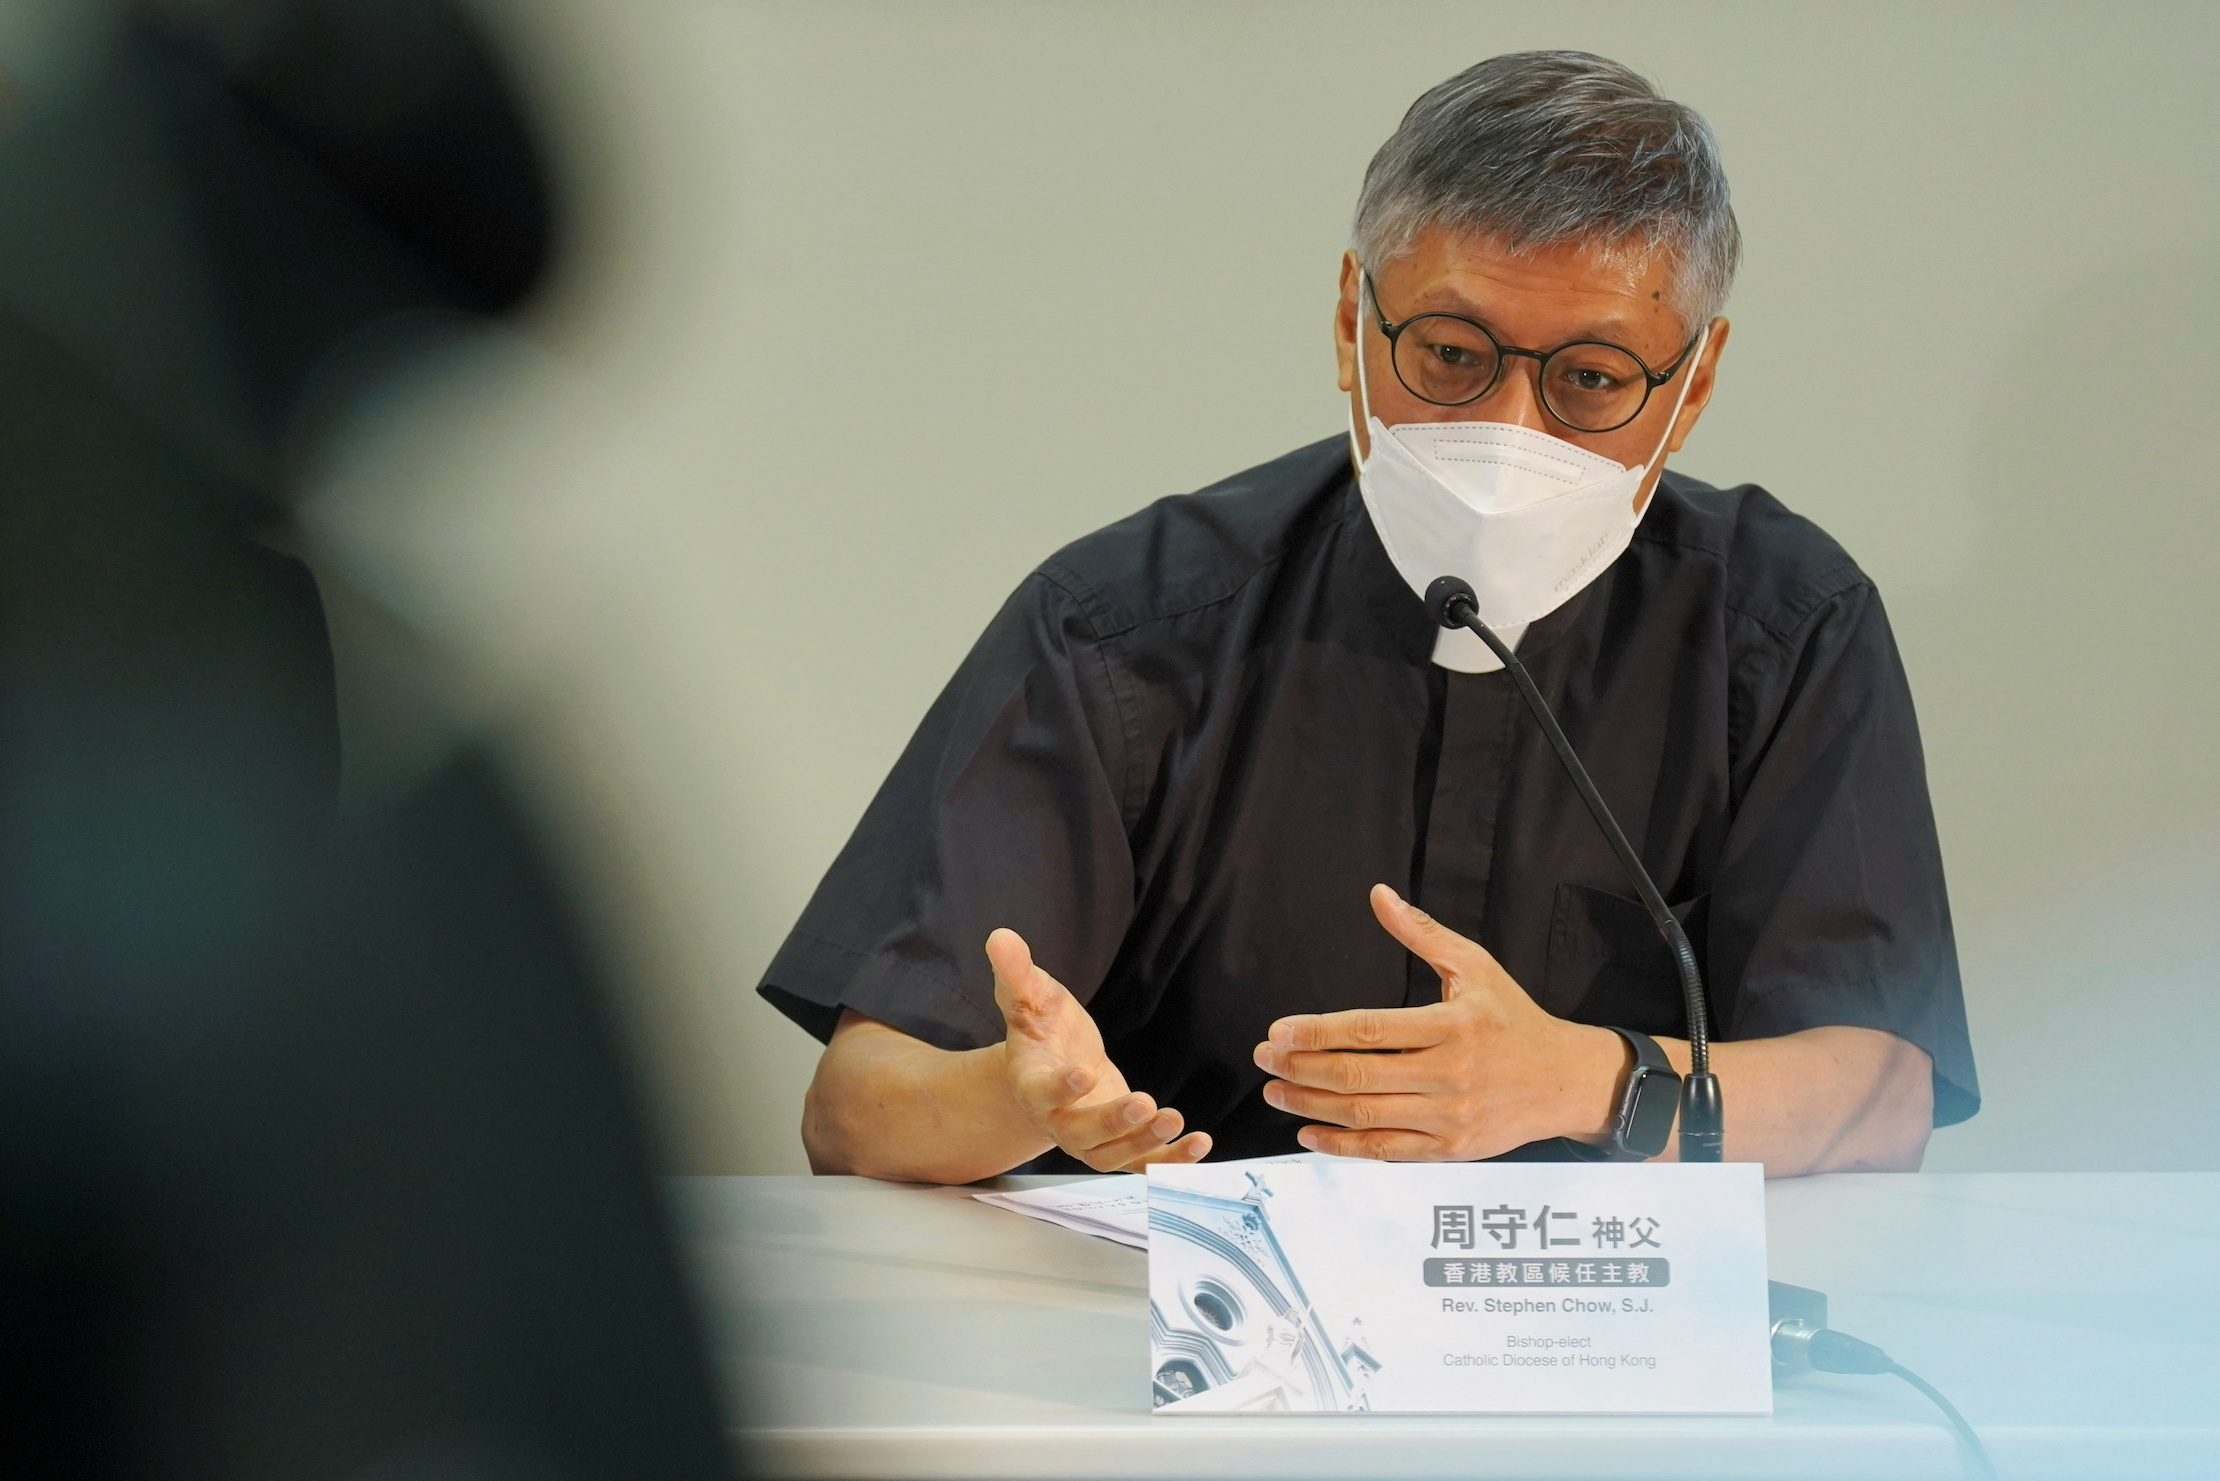 New Hong Kong bishop says will pray for Tiananmen victims, follow the law